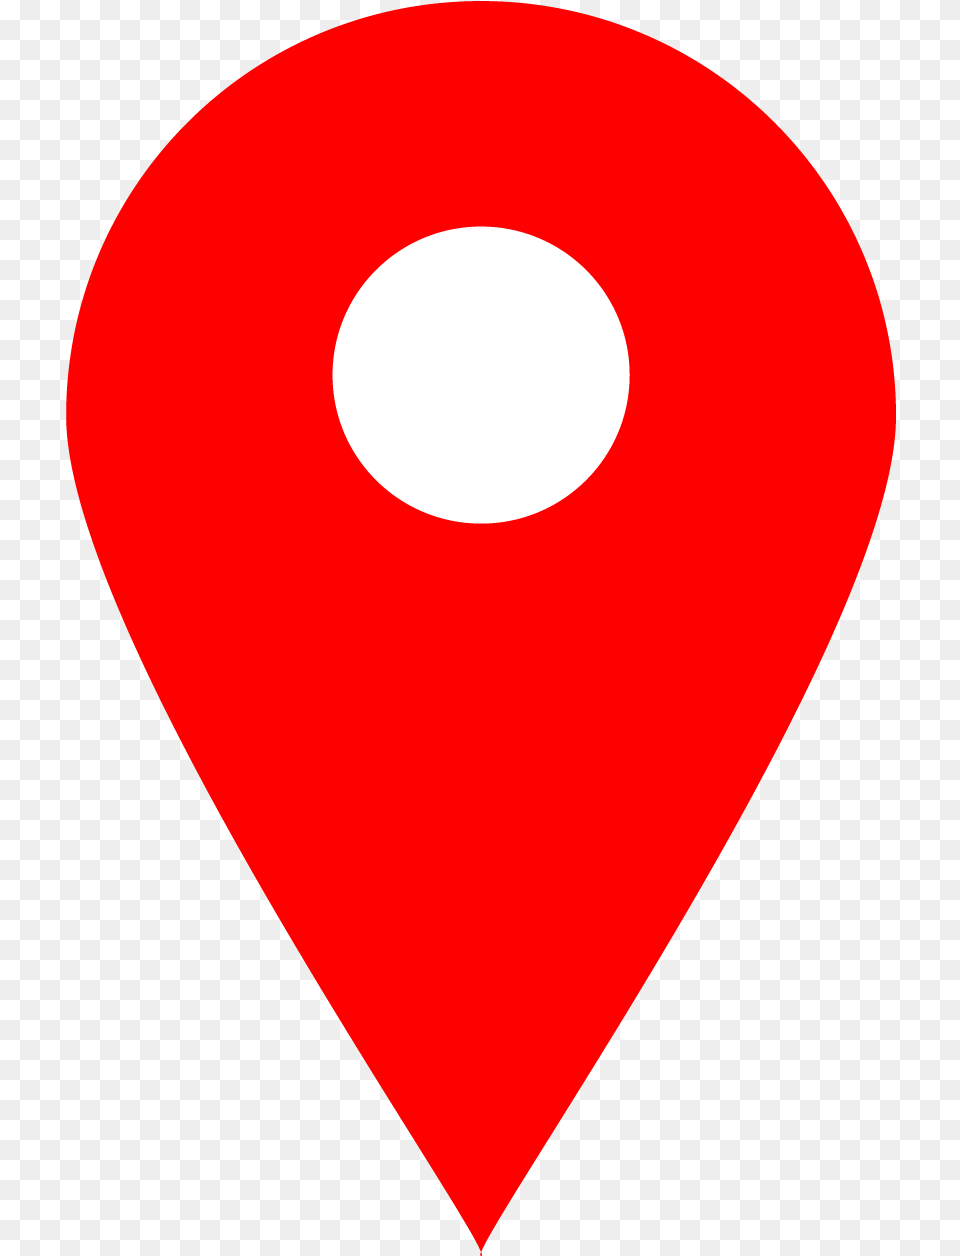 Crow Museum Of Asian Art Dallas Arts District Pin Google Maps Logo, Heart, Balloon Png Image